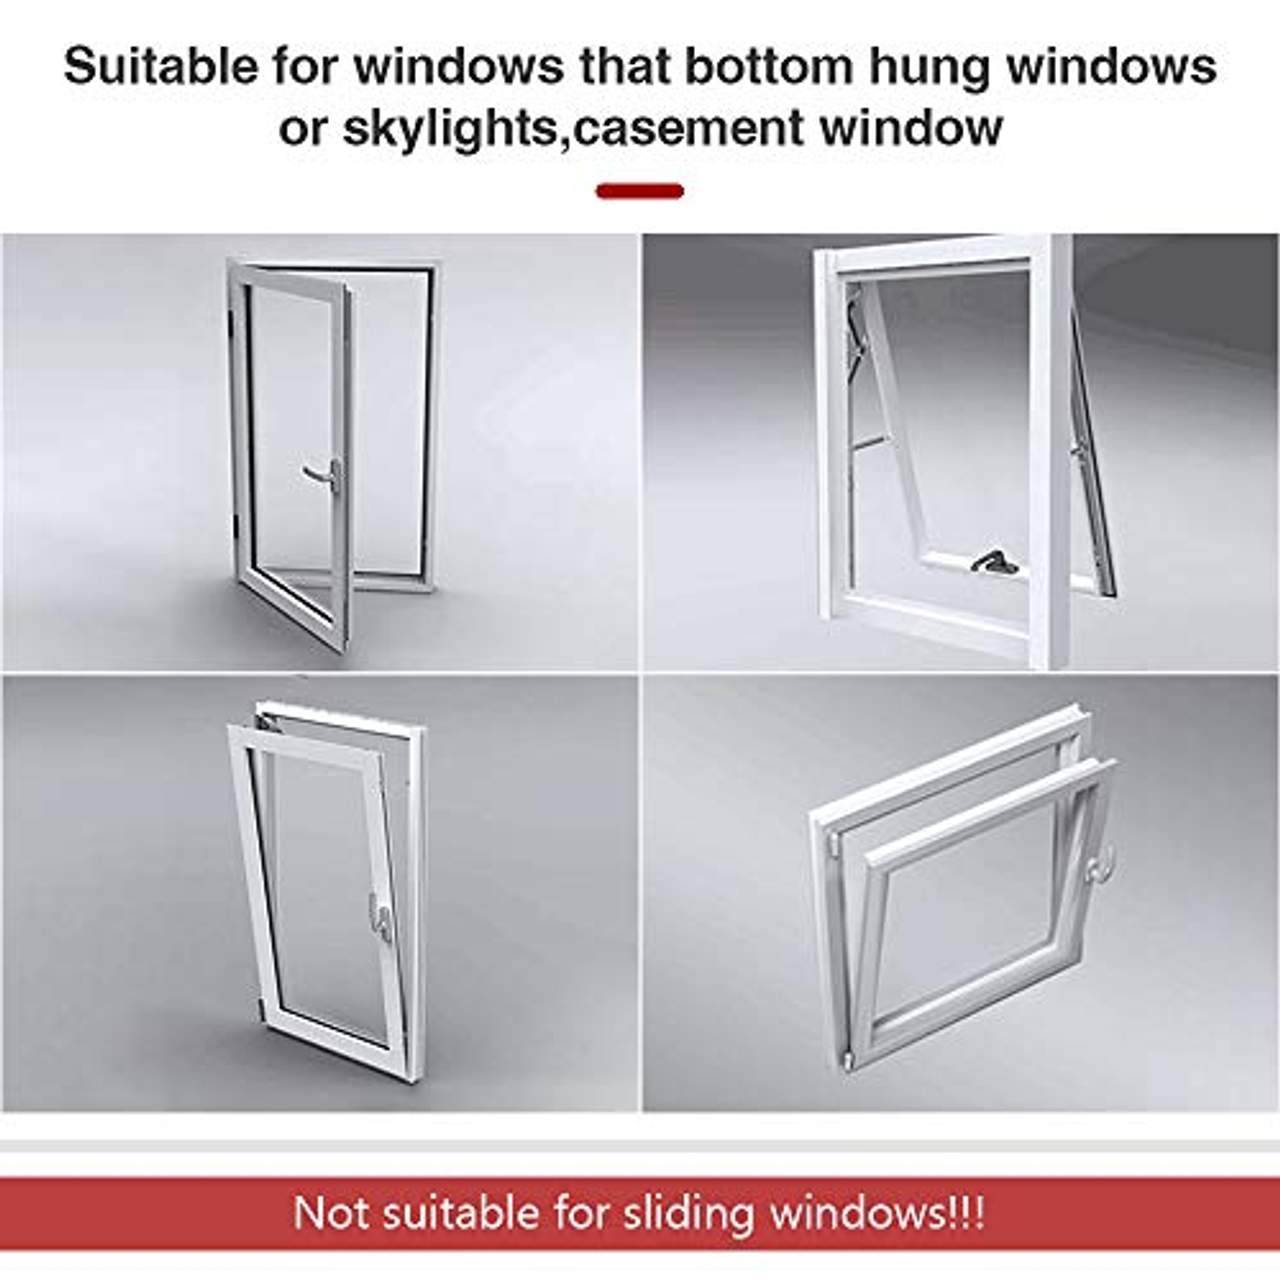 Olssad Fensterabdichtung Für mobile Klimageräte Window Seal for Portable Air Conditioner